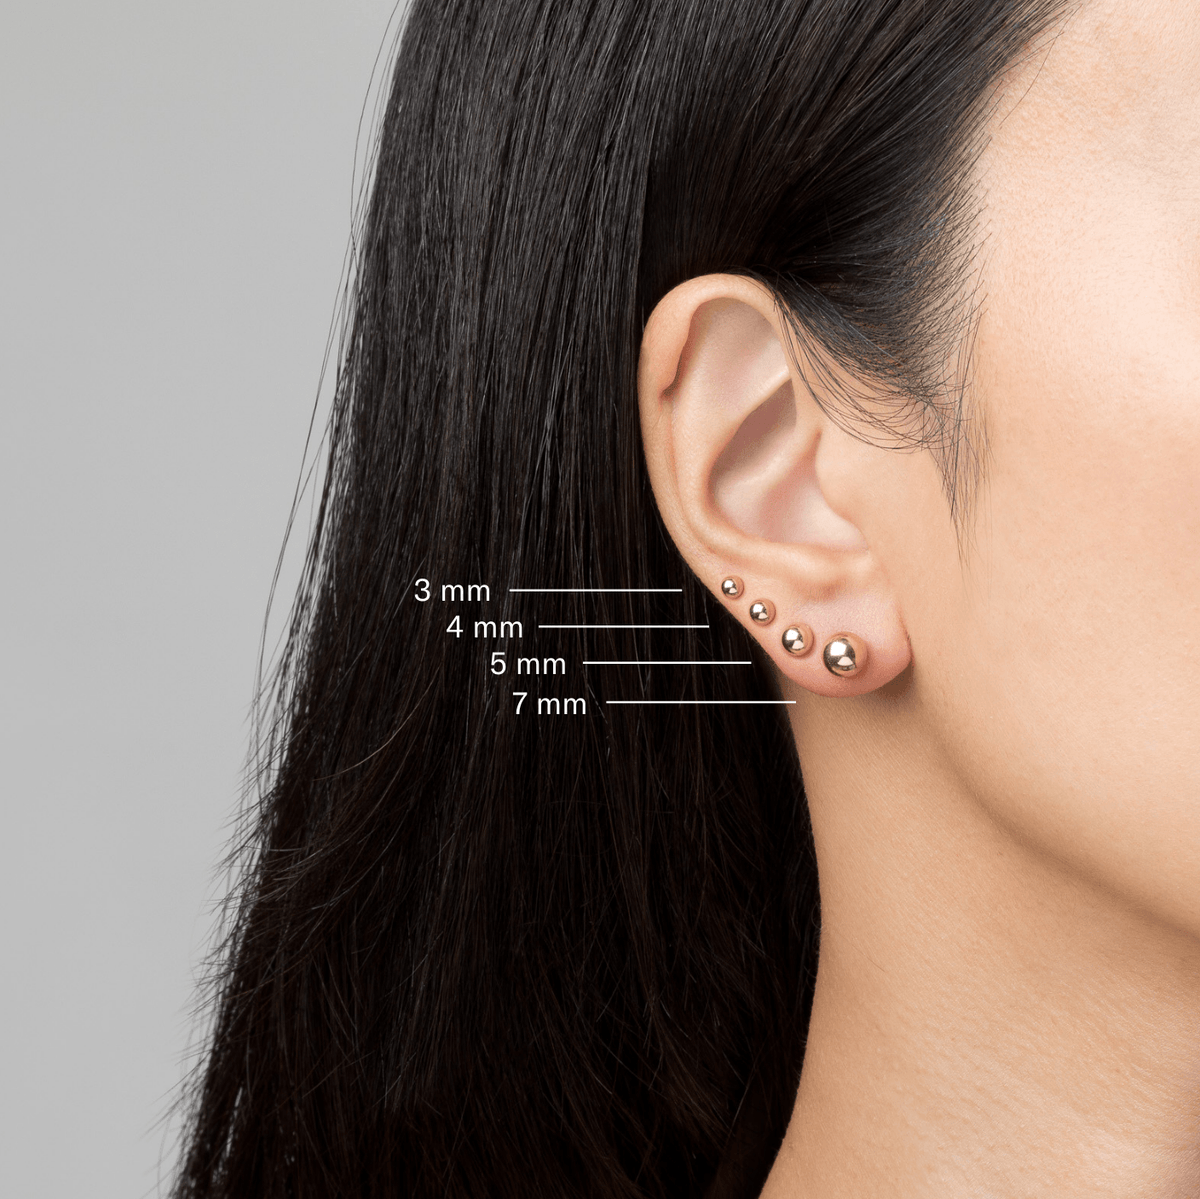 3mm Ball Stud Piercing Earrings in 14K Solid Gold - Short Post